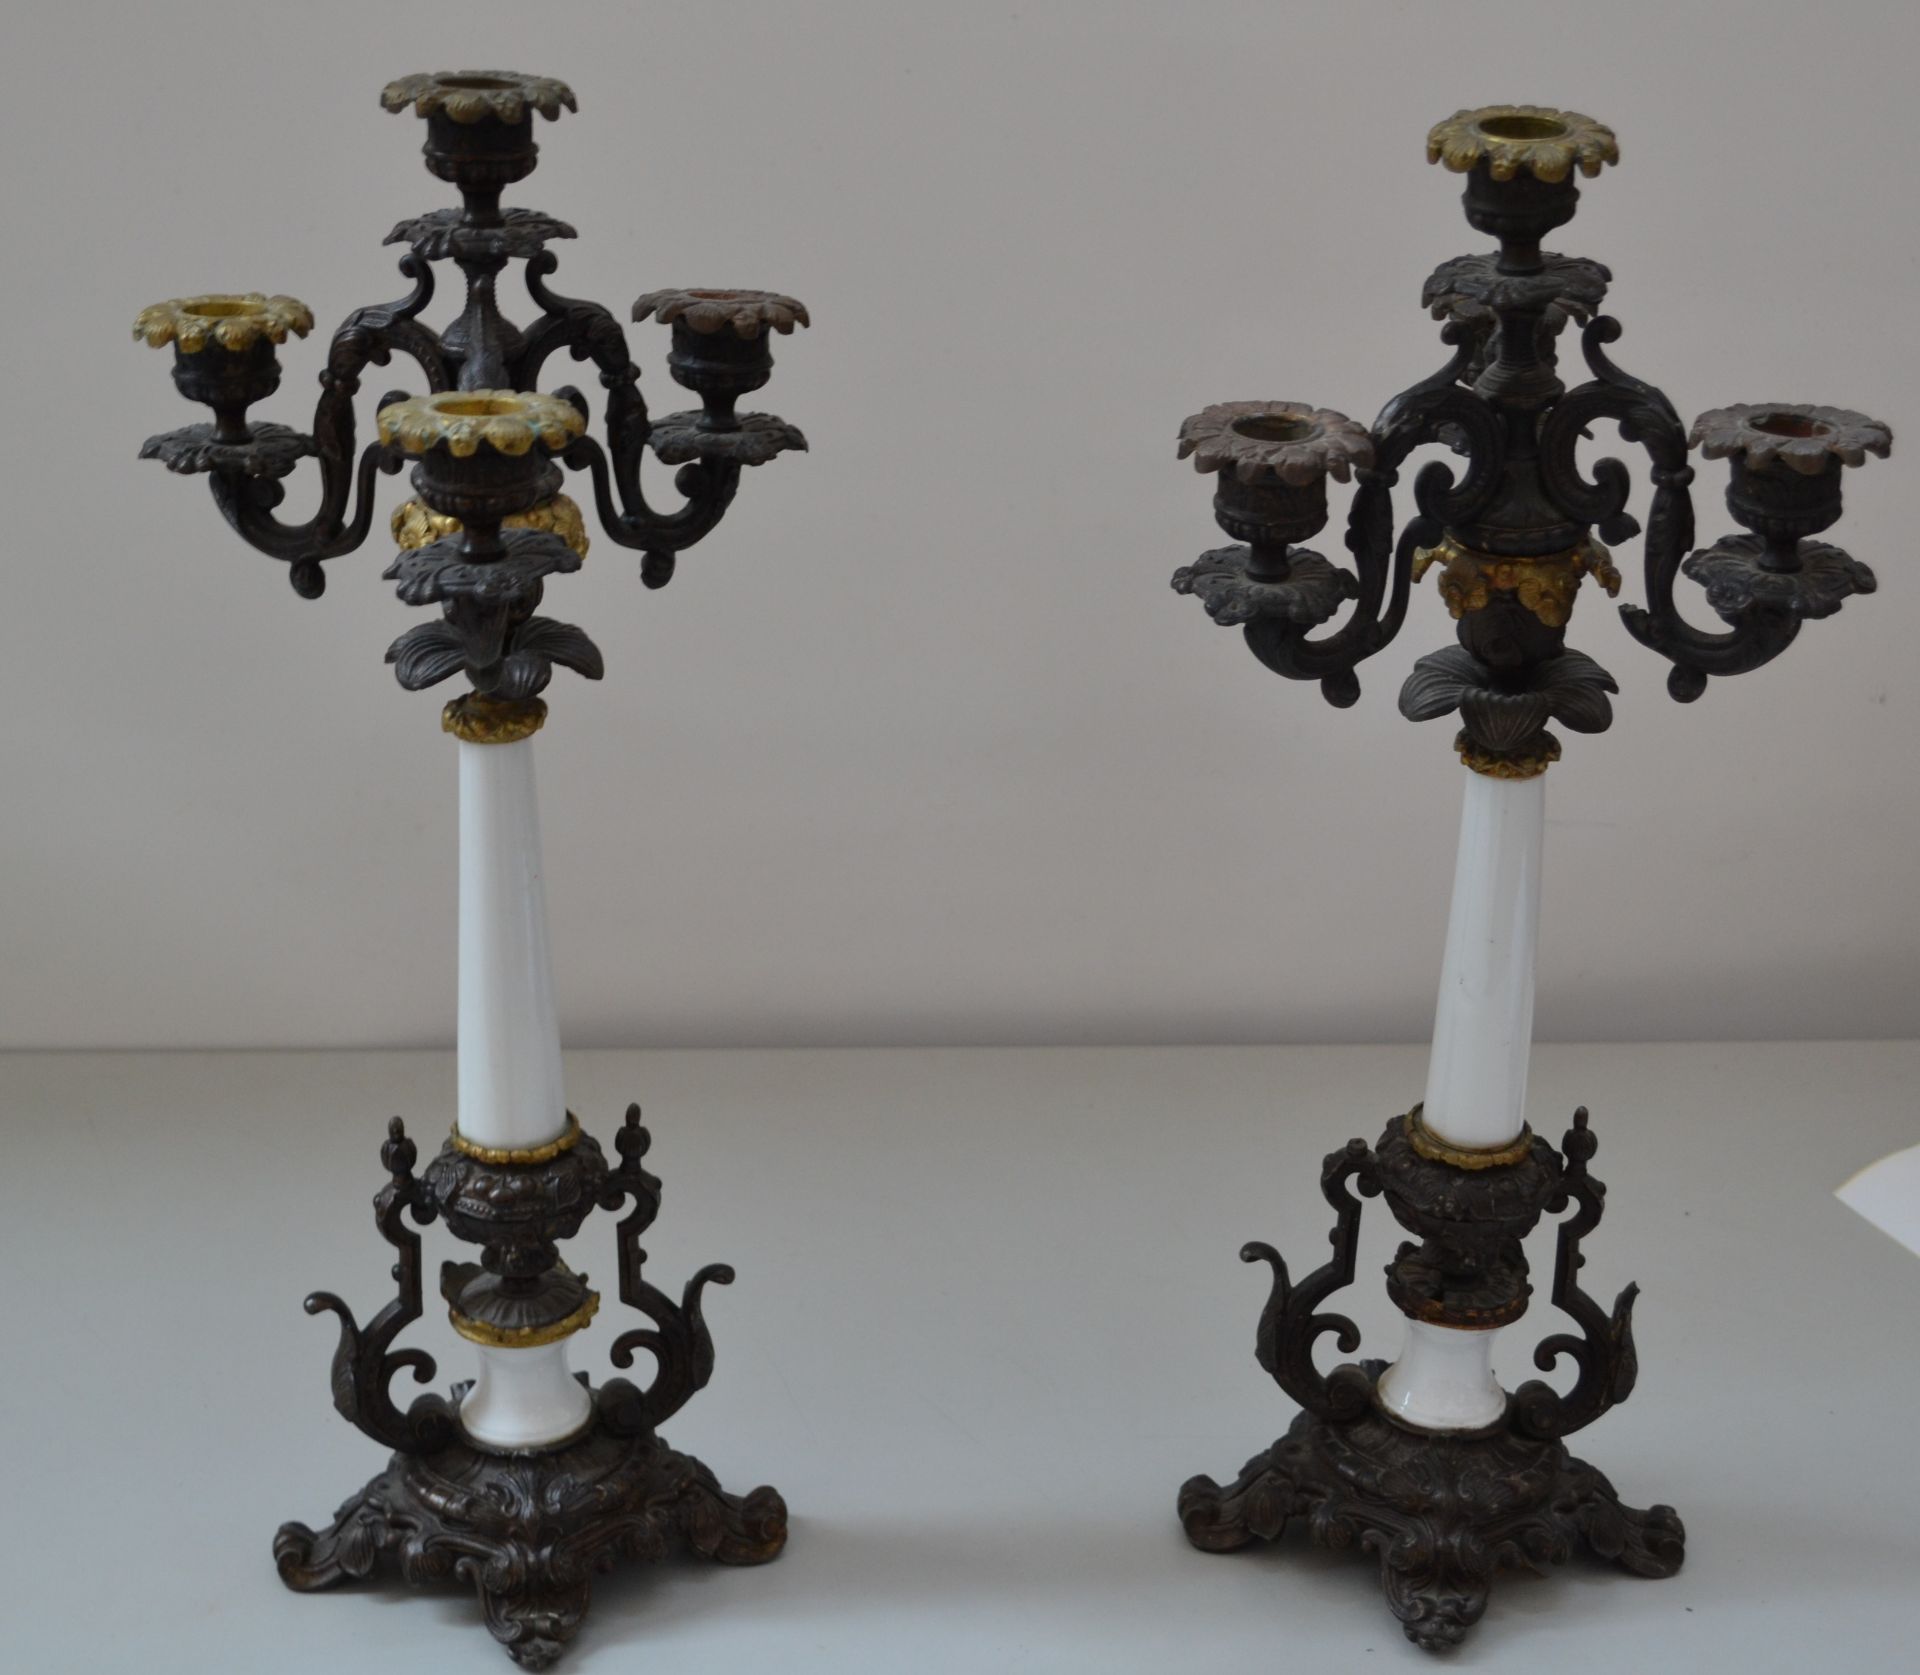 1 x A Pair Antique Candlesticks Holders - H45/W15cm - Ref J2175 - CL314